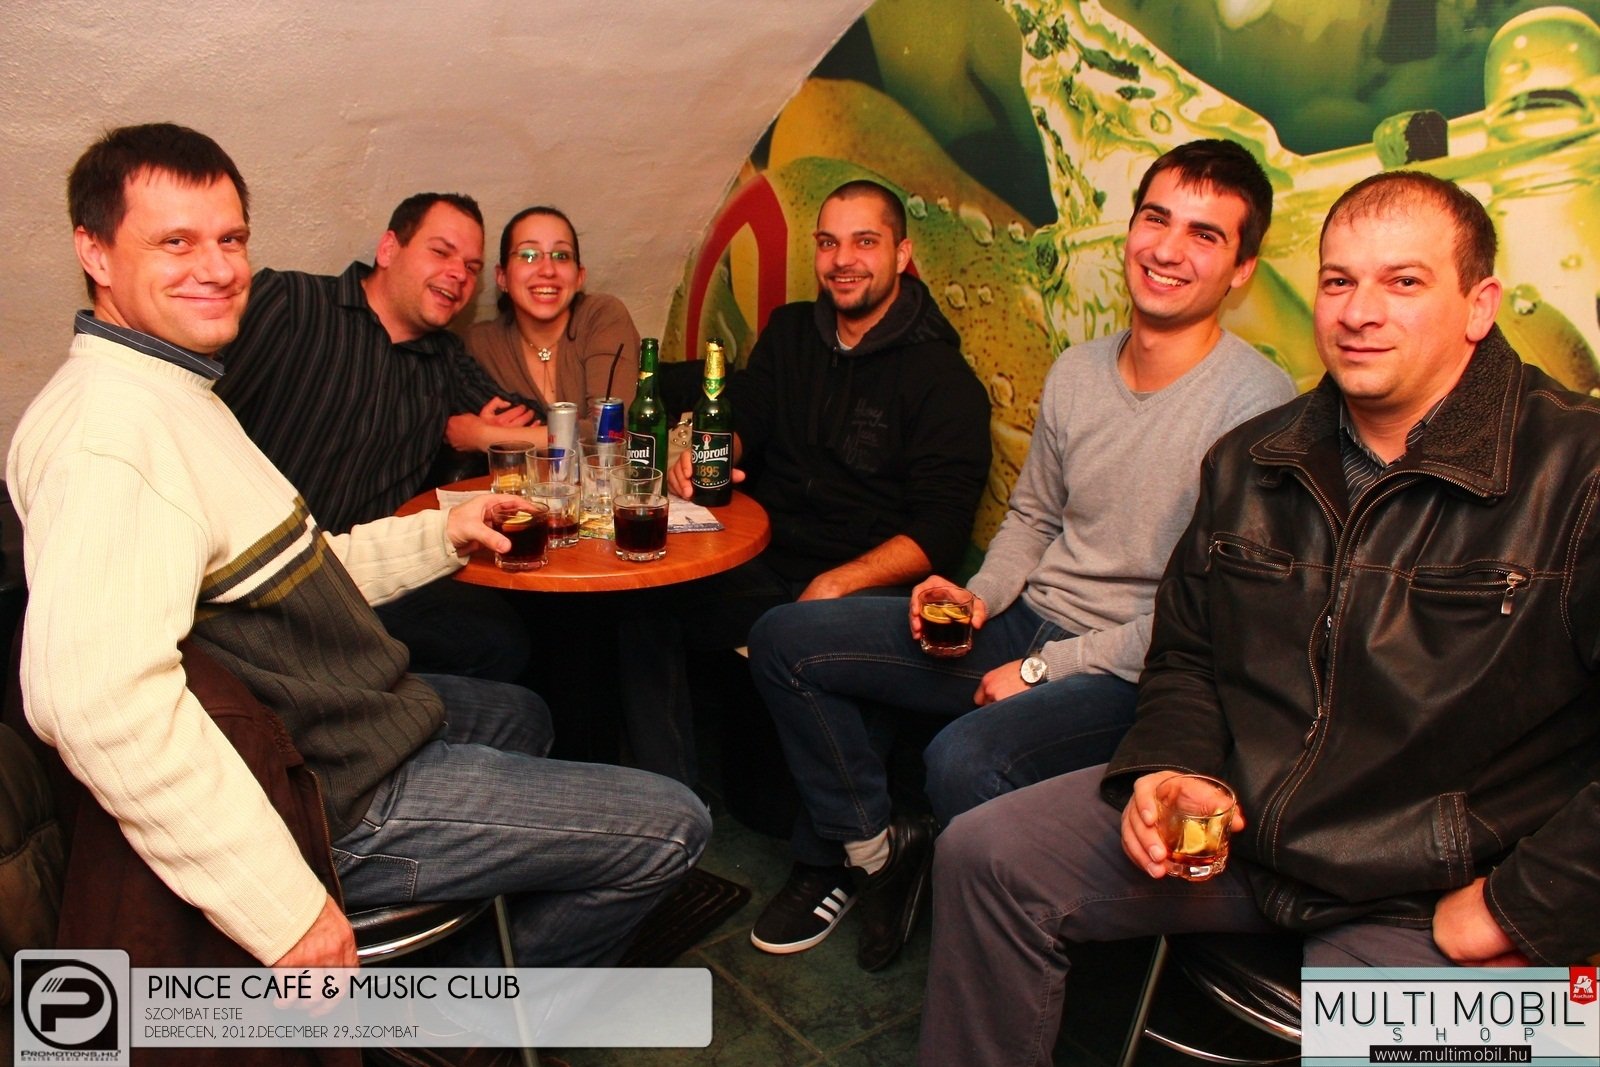 DEBRECEN PINCE CAFÉ & MUSIC CLUB-2012.DECEMBER 29.,SZOMBAT